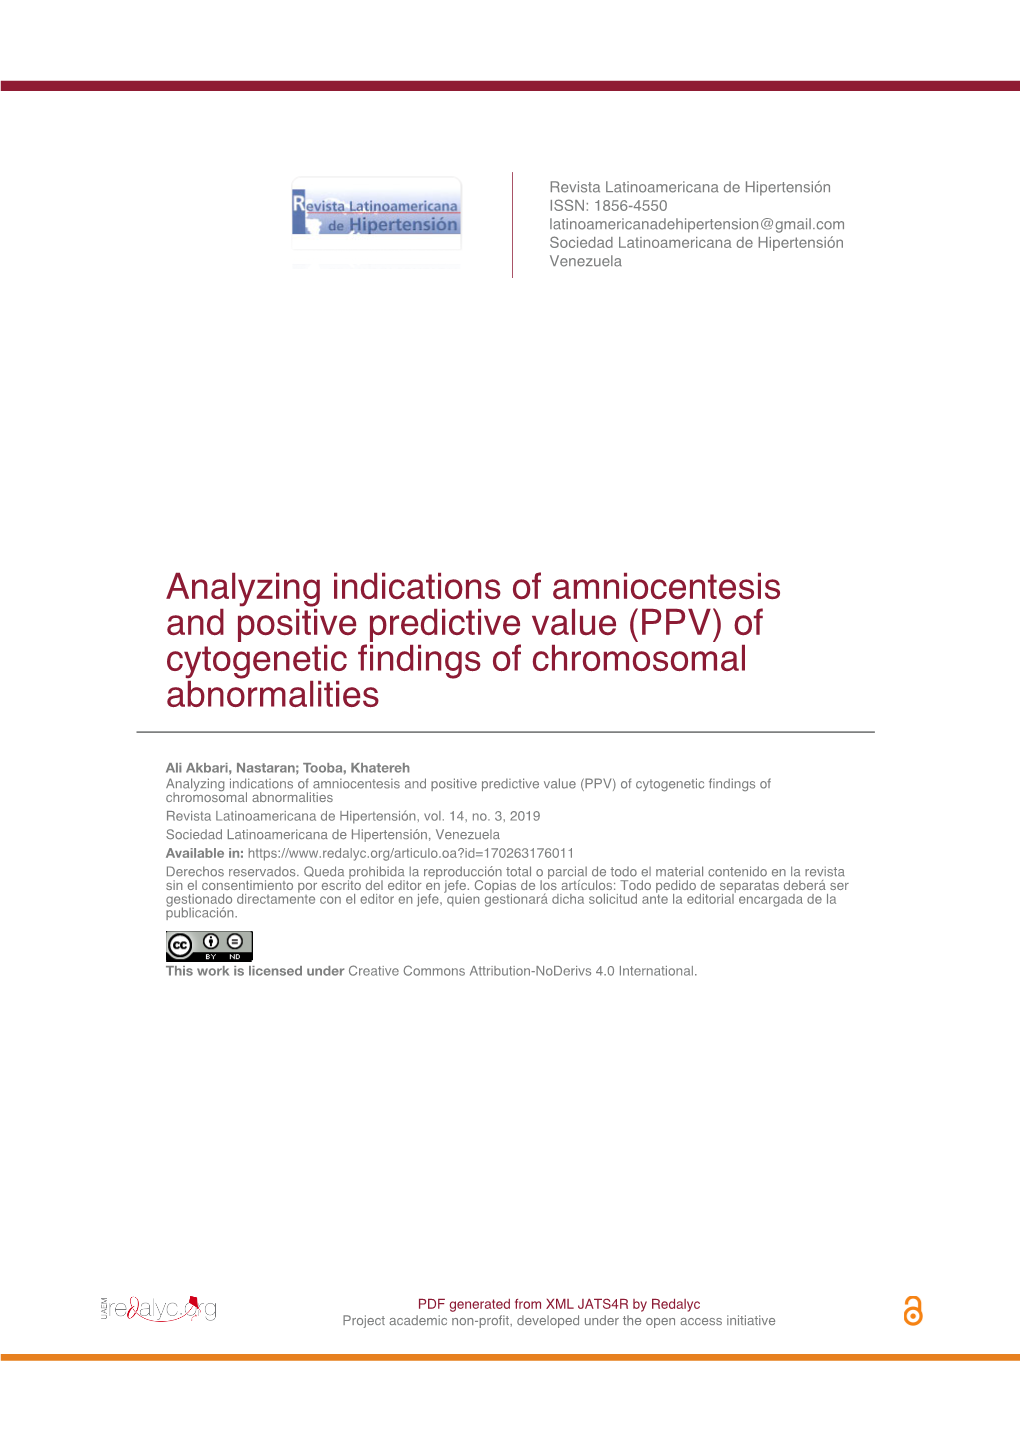 Of Cytogenetic Findings of Chromosomal Abnormalities